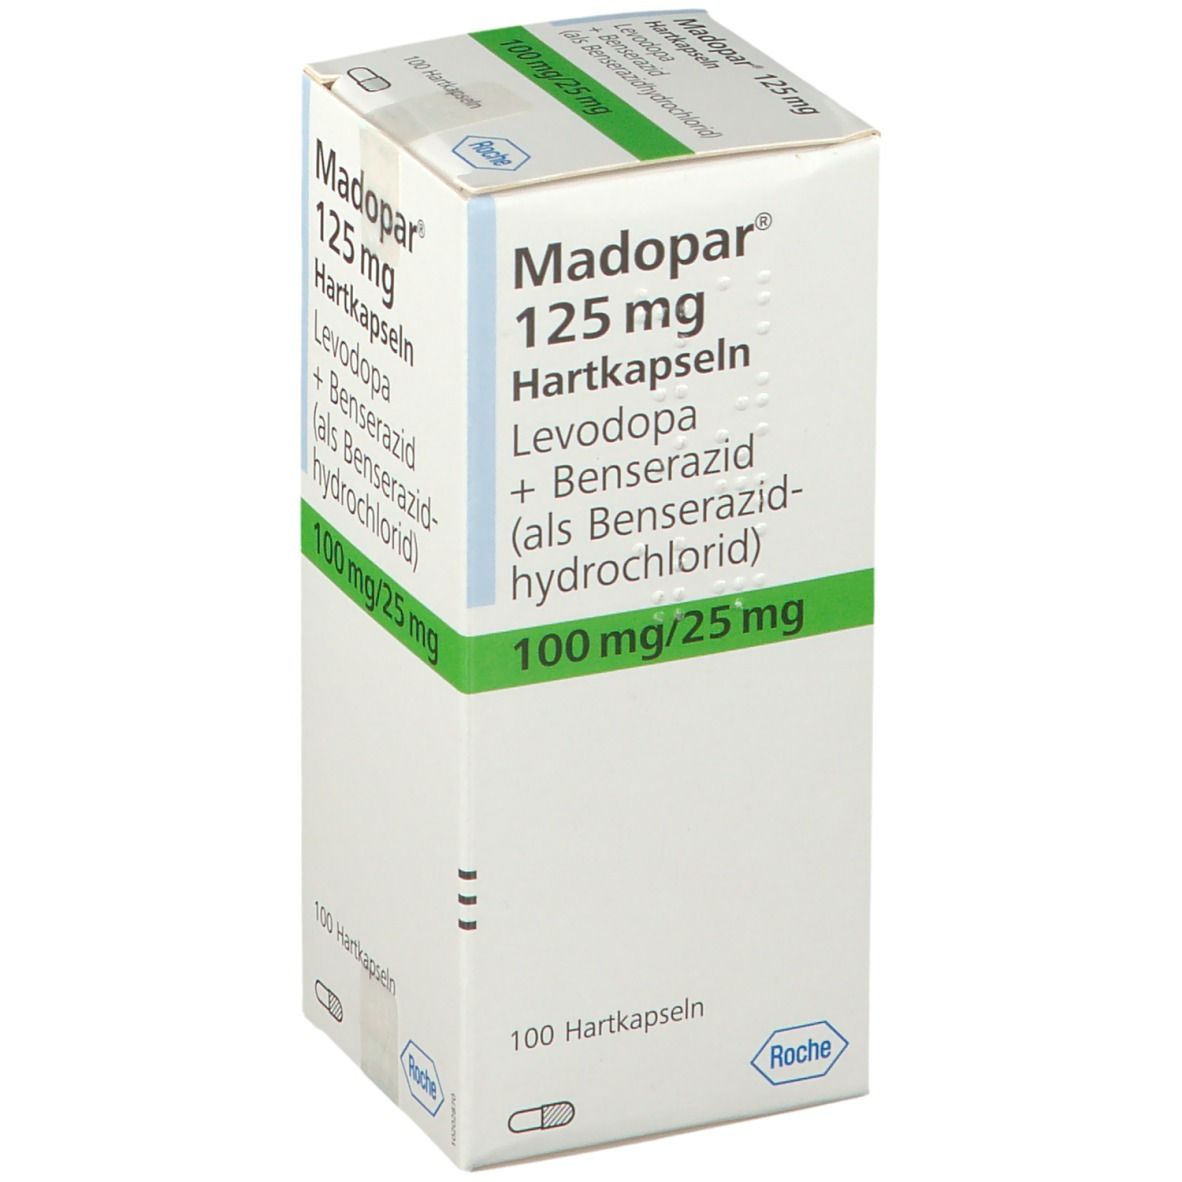 Madopar® 125 mg